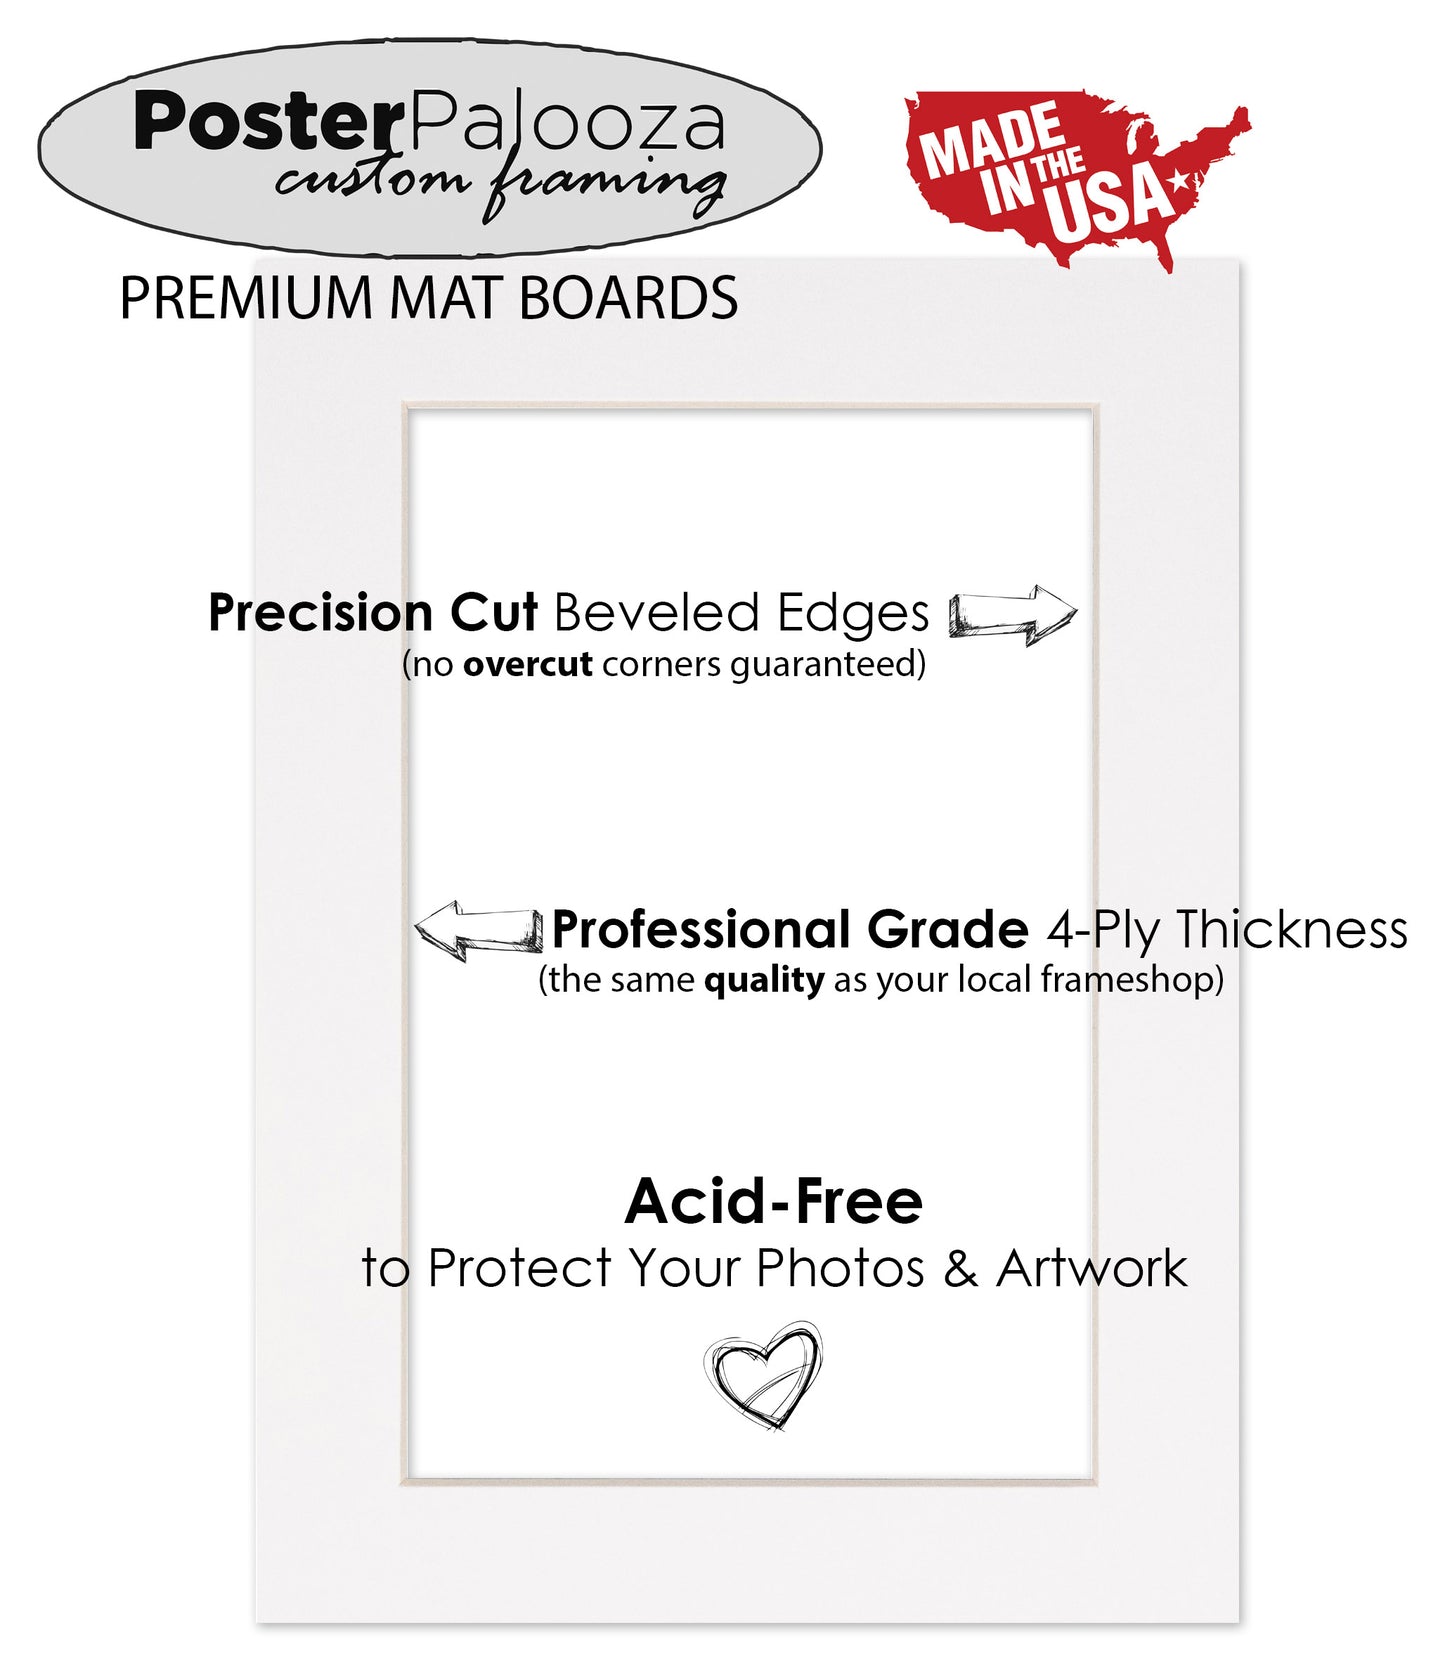 Pack of 10 Soft Yellow Precut Acid-Free Matboards